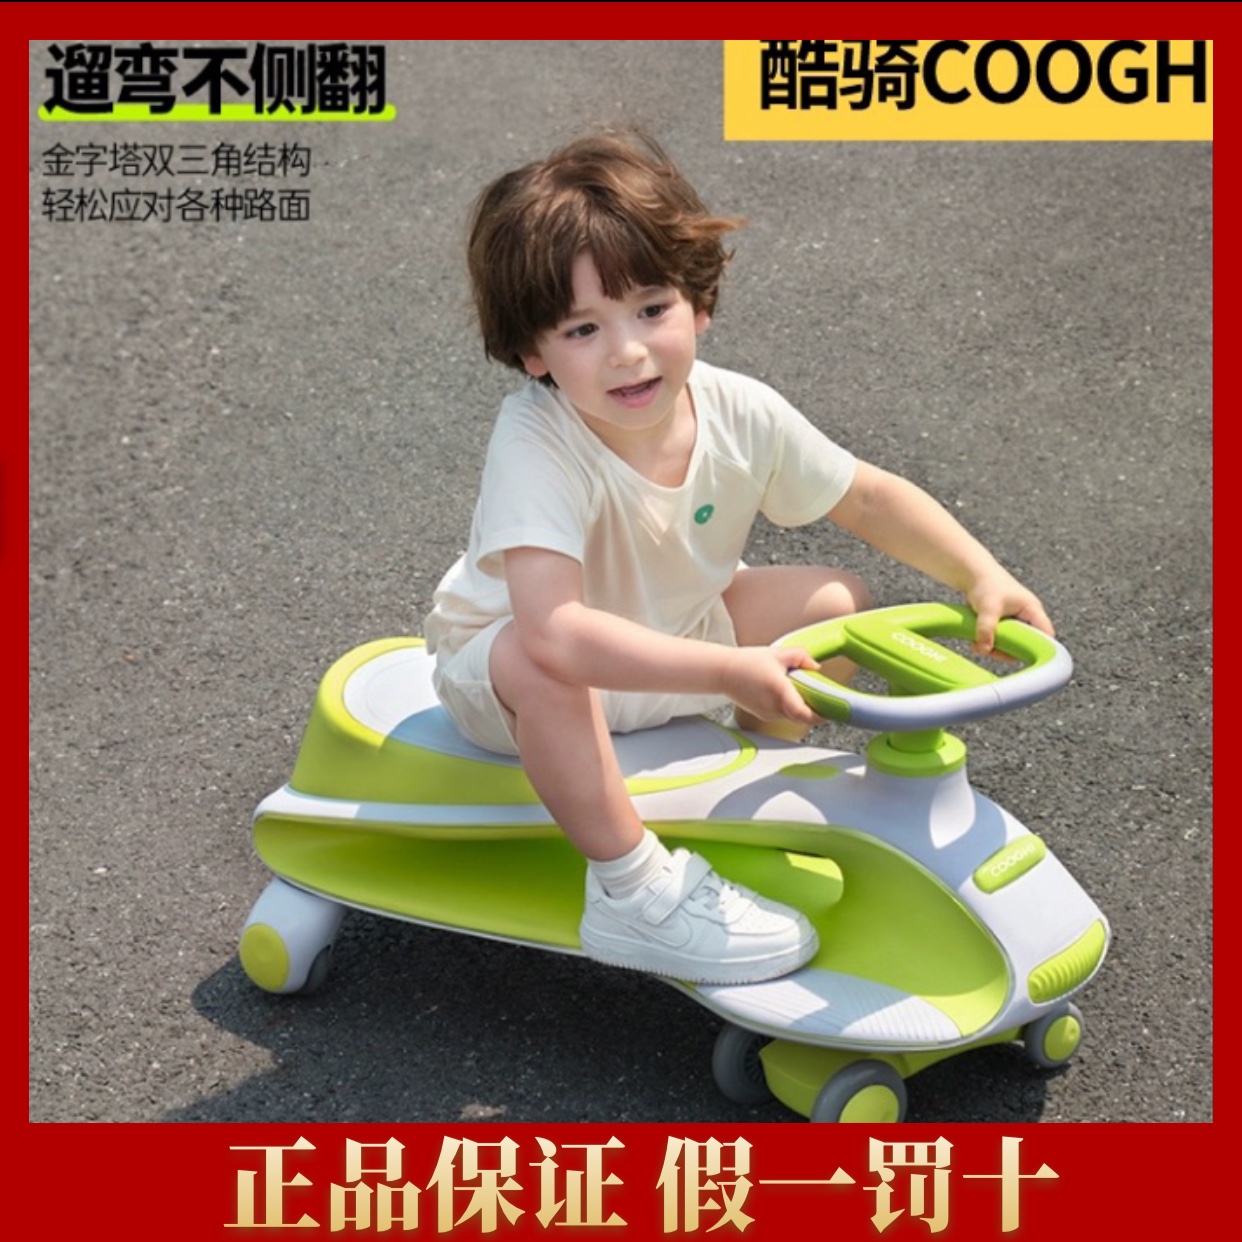 COOGHI酷骑儿童扭扭车1-3-6岁婴儿男女宝宝溜溜妞妞车大人可坐